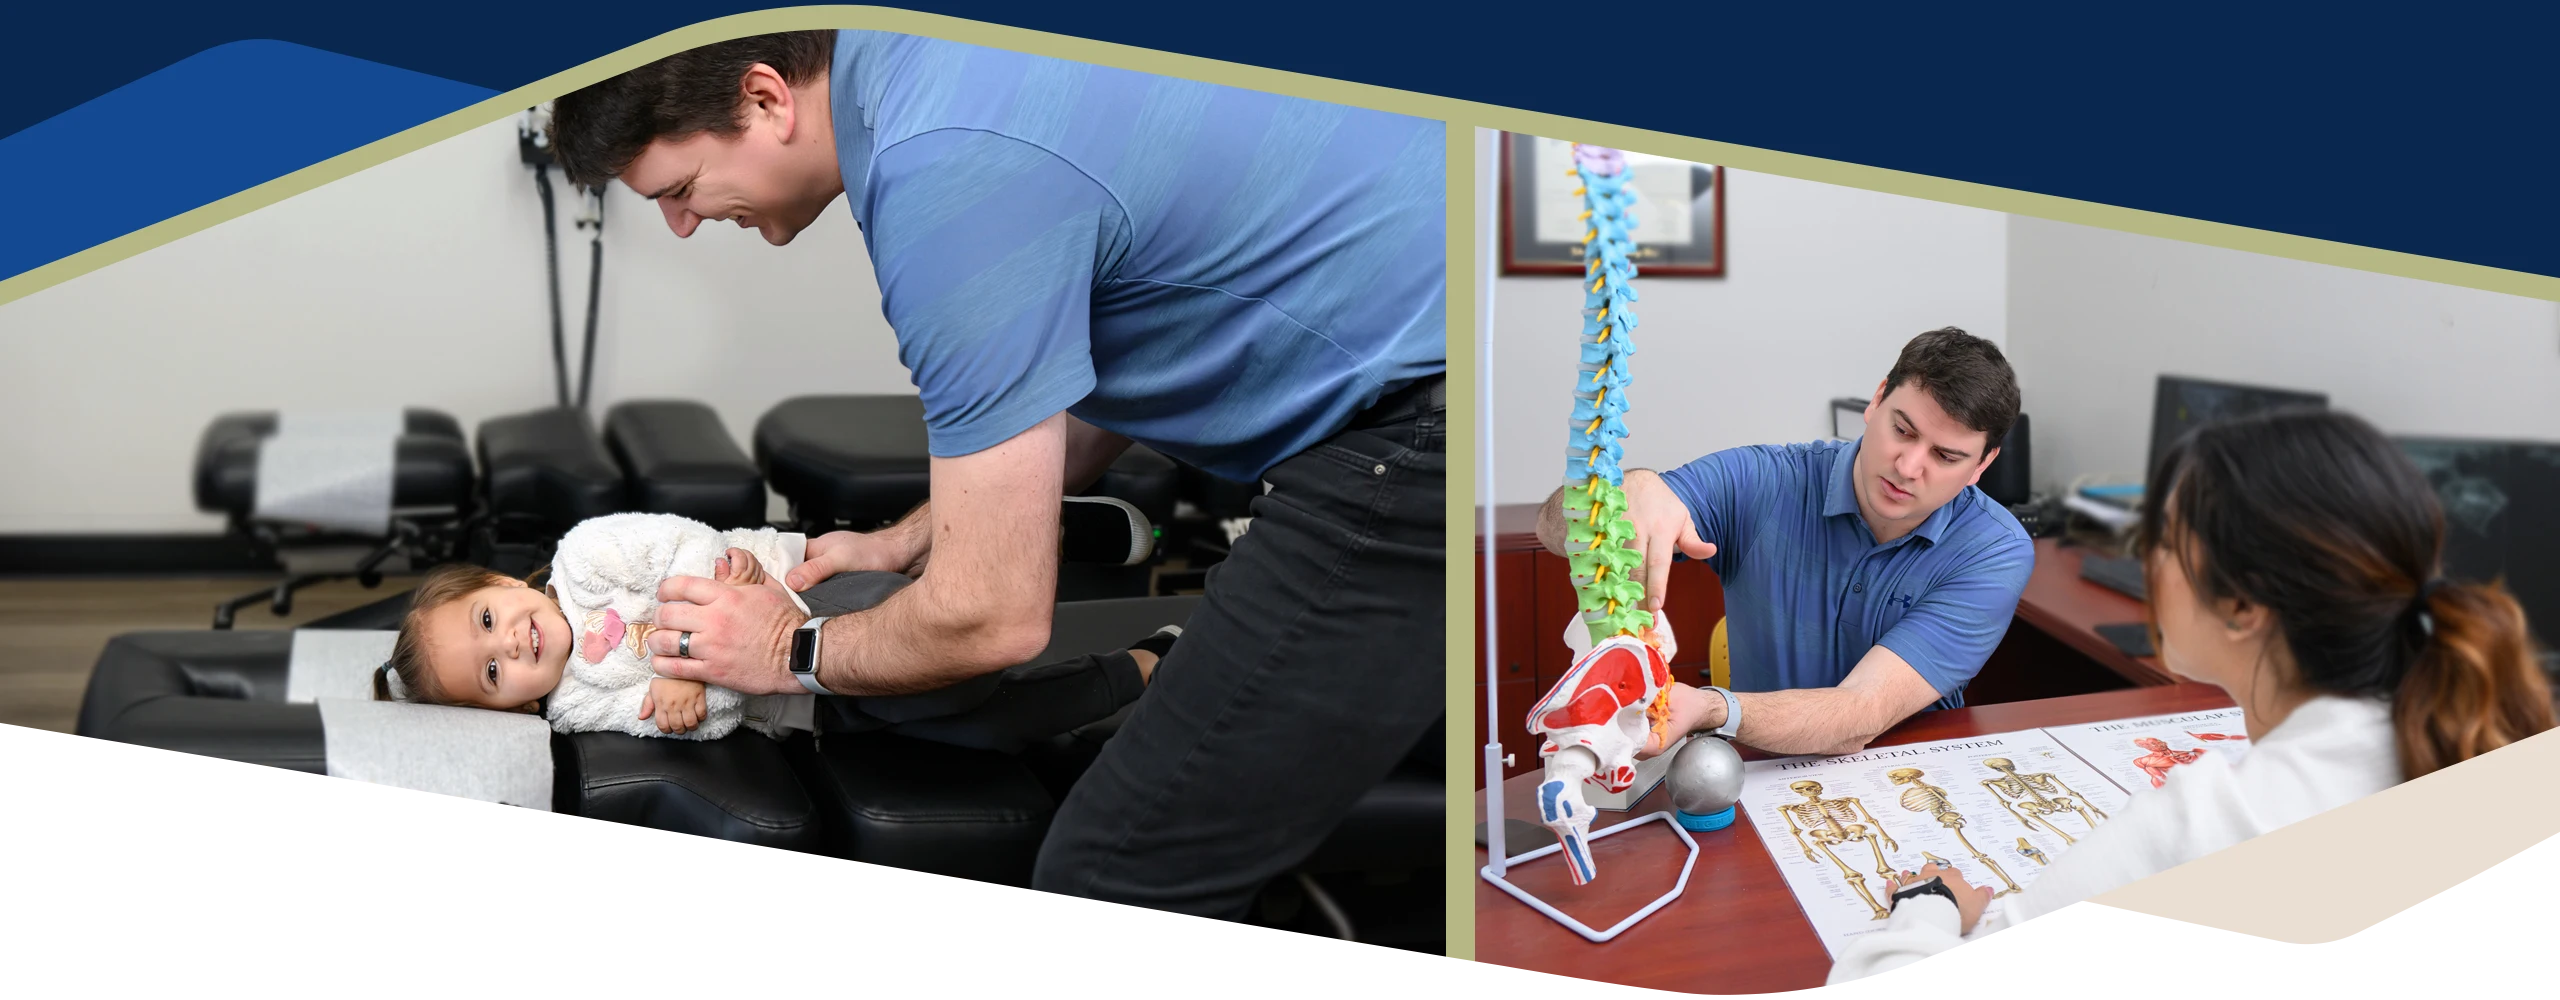 Chiropractor Magna UT Brett Judson Adjusting Child and Educating